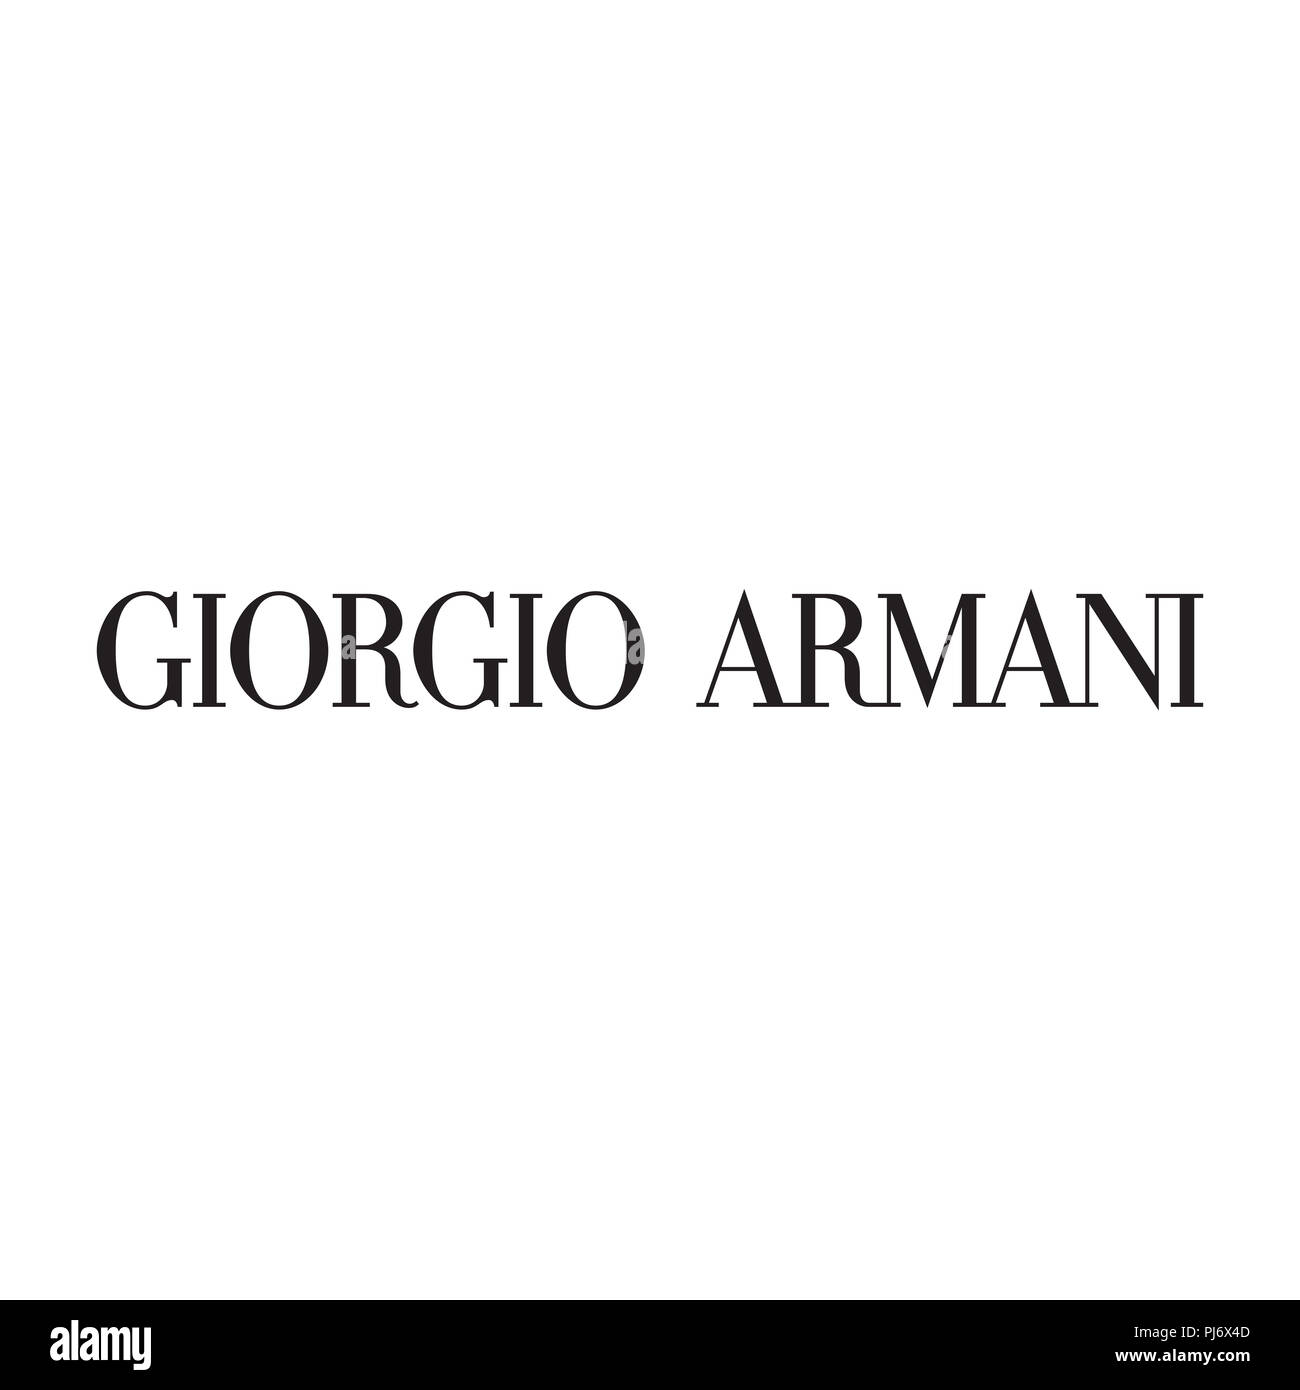 giorgio armani logo fashion luxury brand  clothes illustration Stock Photo